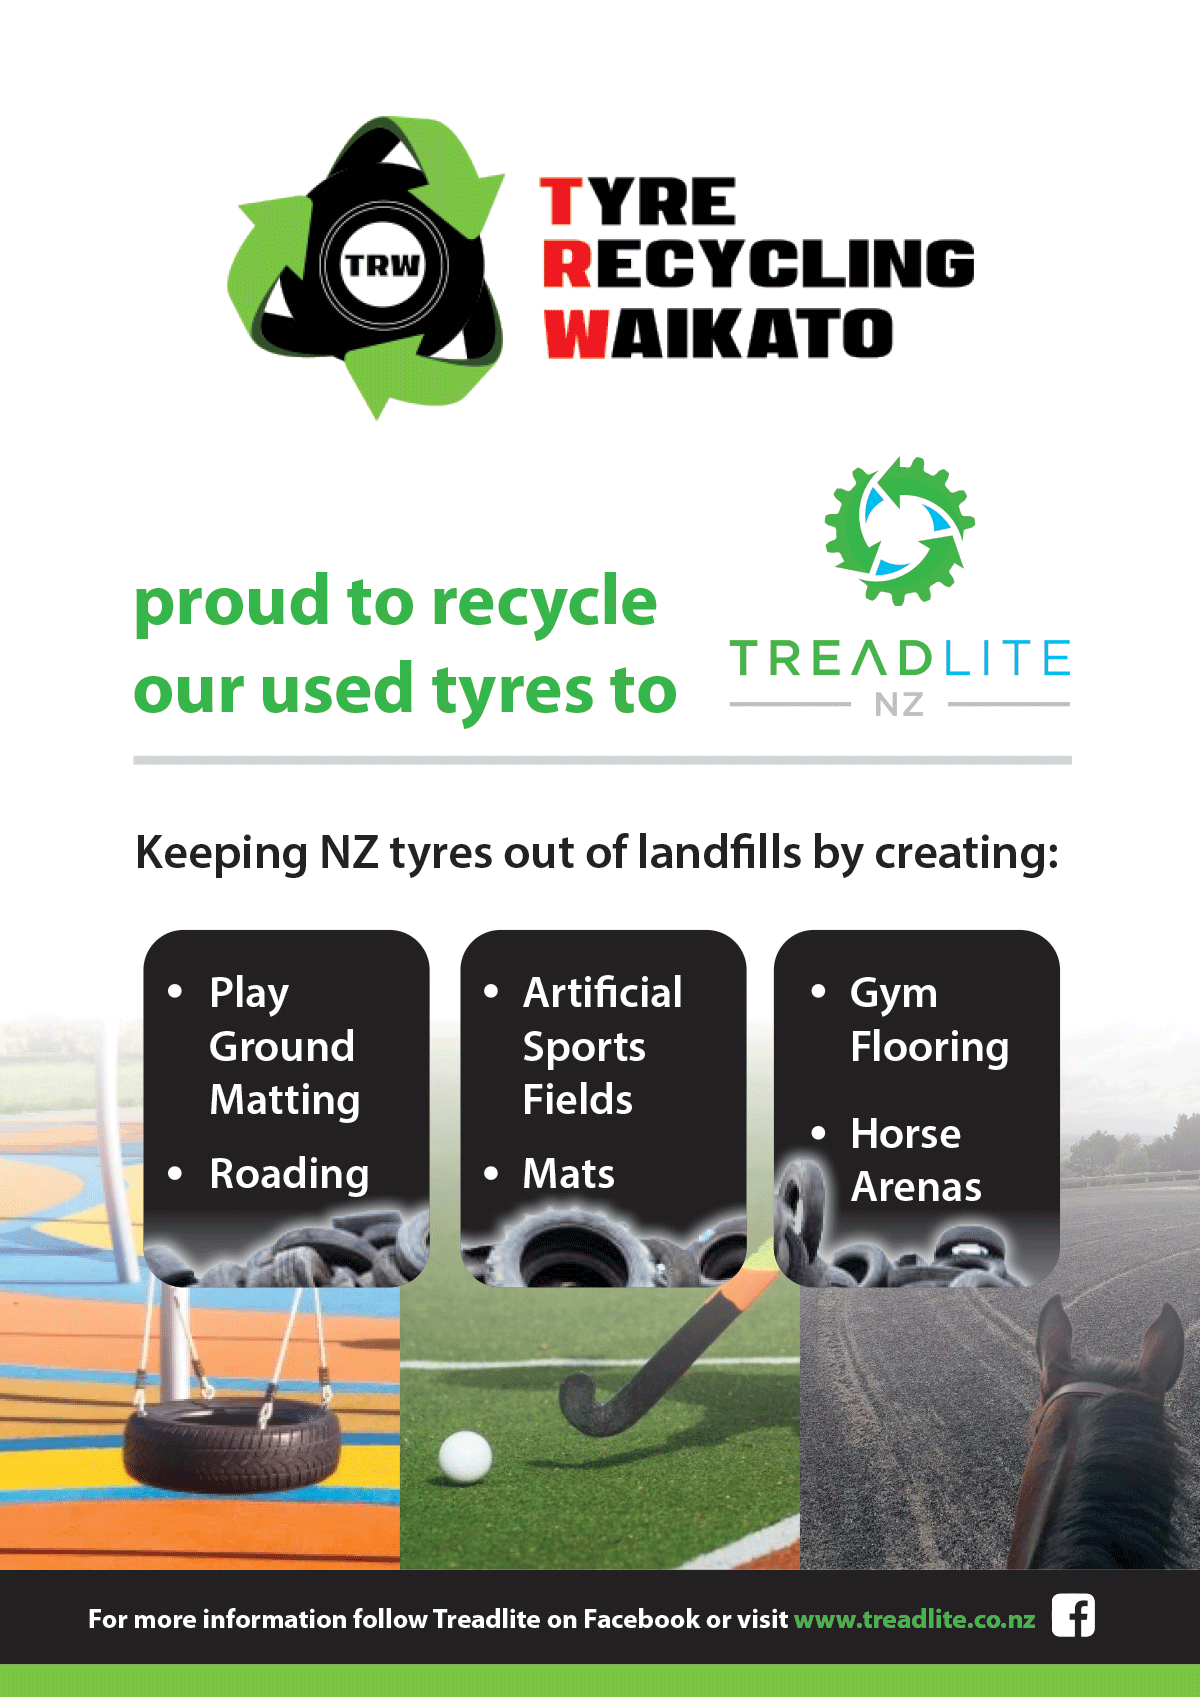 Tyre recycling waikato treadlite poster